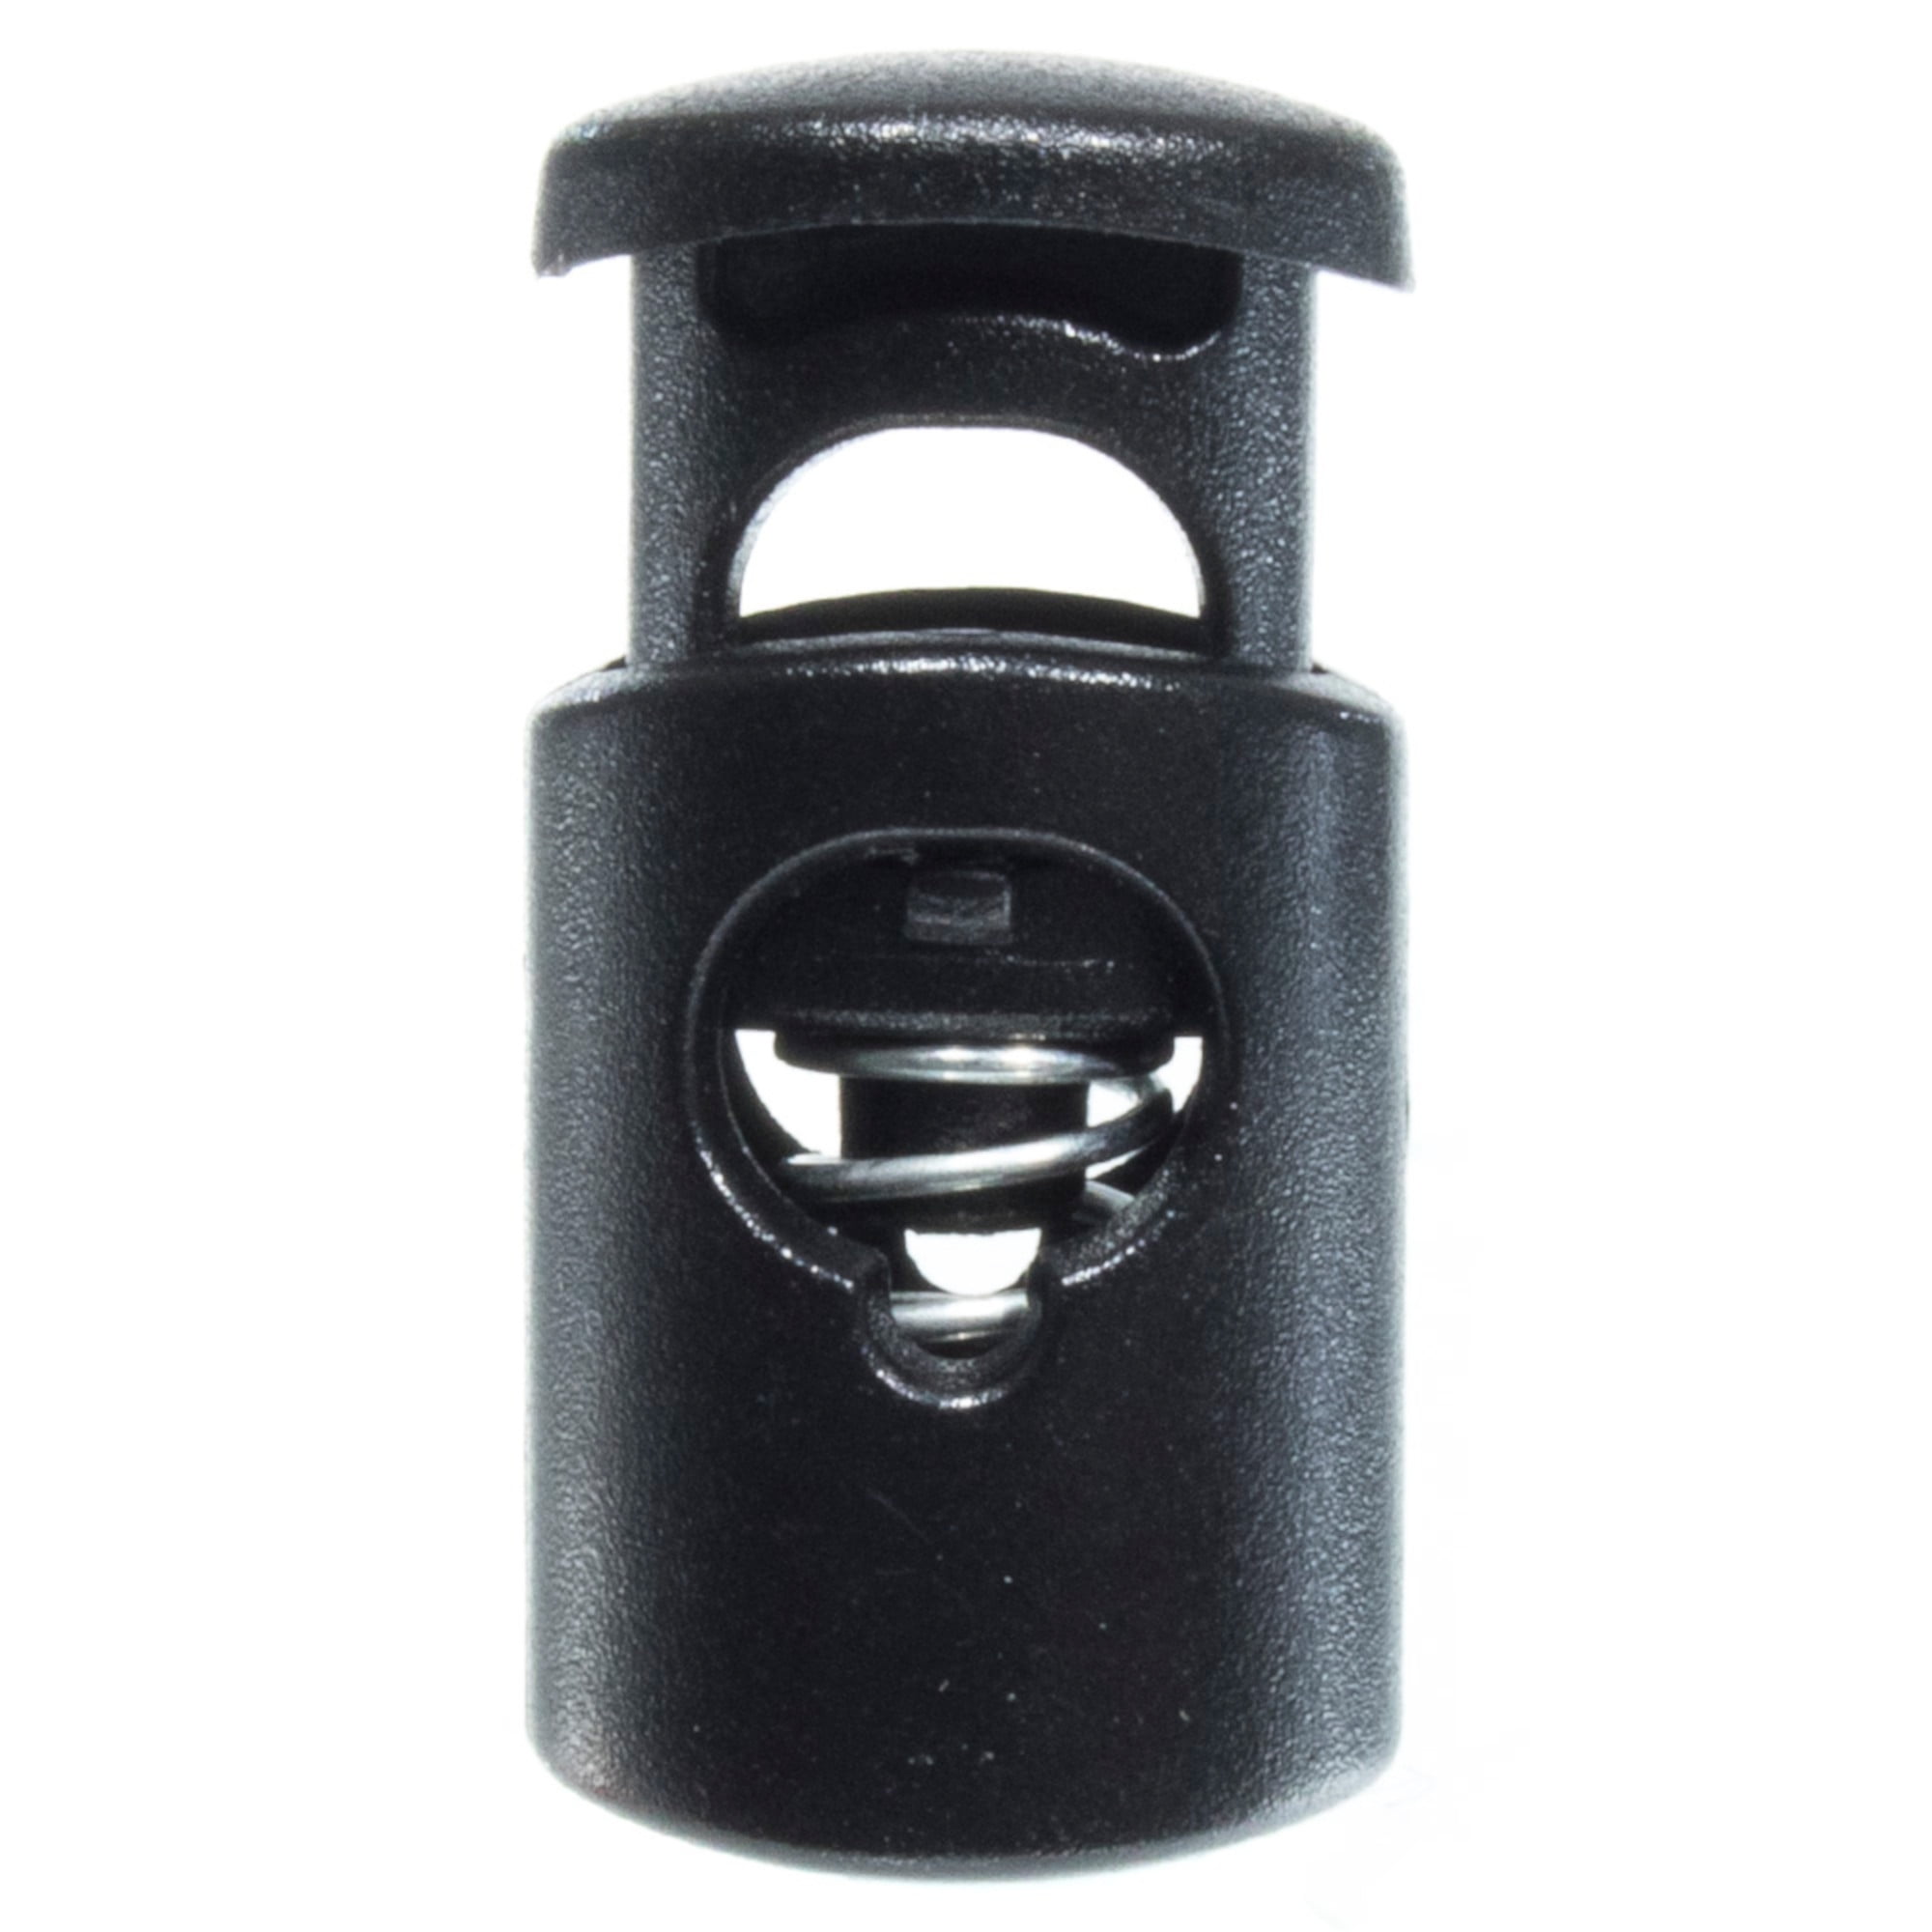 20x Plastic Shock Cord Ball Stopper Spring Lock End Toggle Fastener,Black 